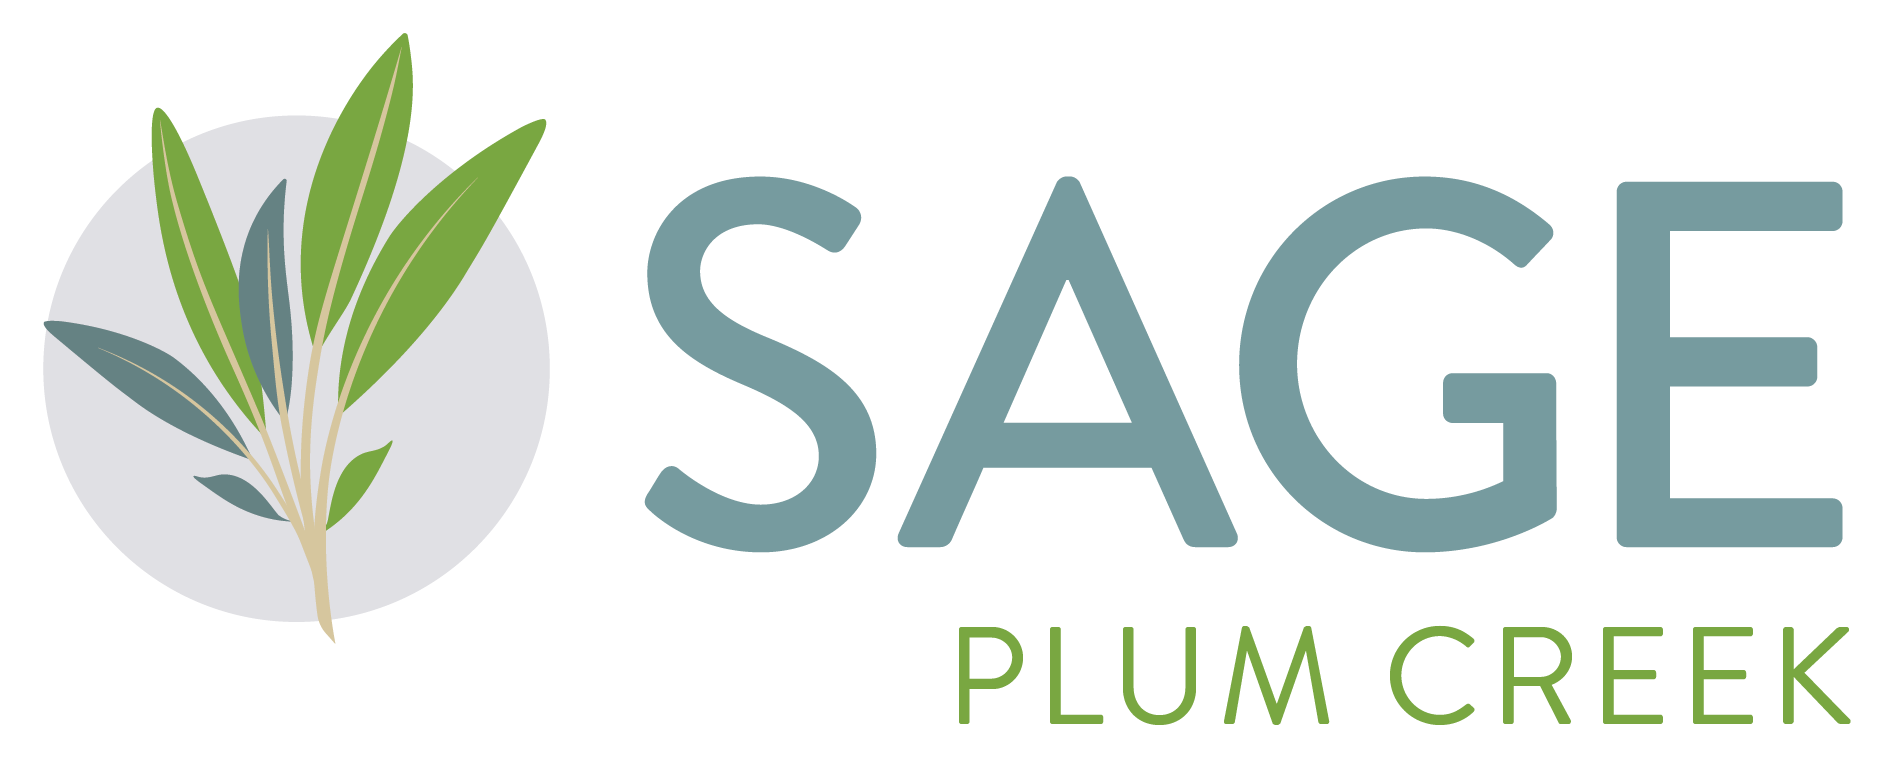 Picture of Sage Plum Creek logo